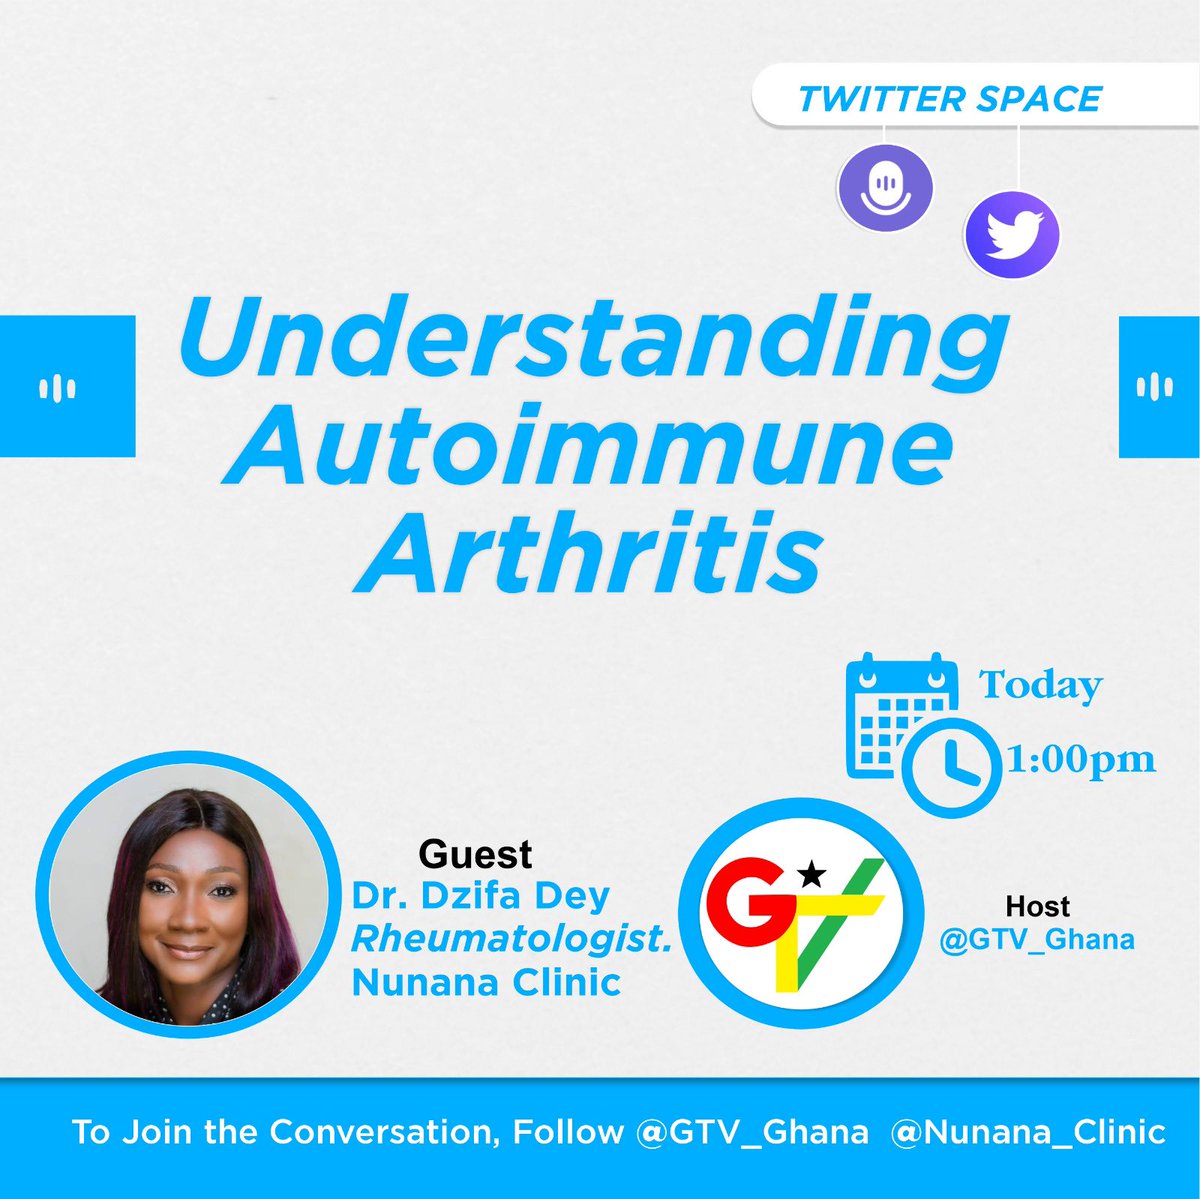 Happening today at 1PM on @GTV_Ghana’s Twitter 

Join us and let’s understand Autoimmune Arthritis 

#ArthritisAwarenessMonth